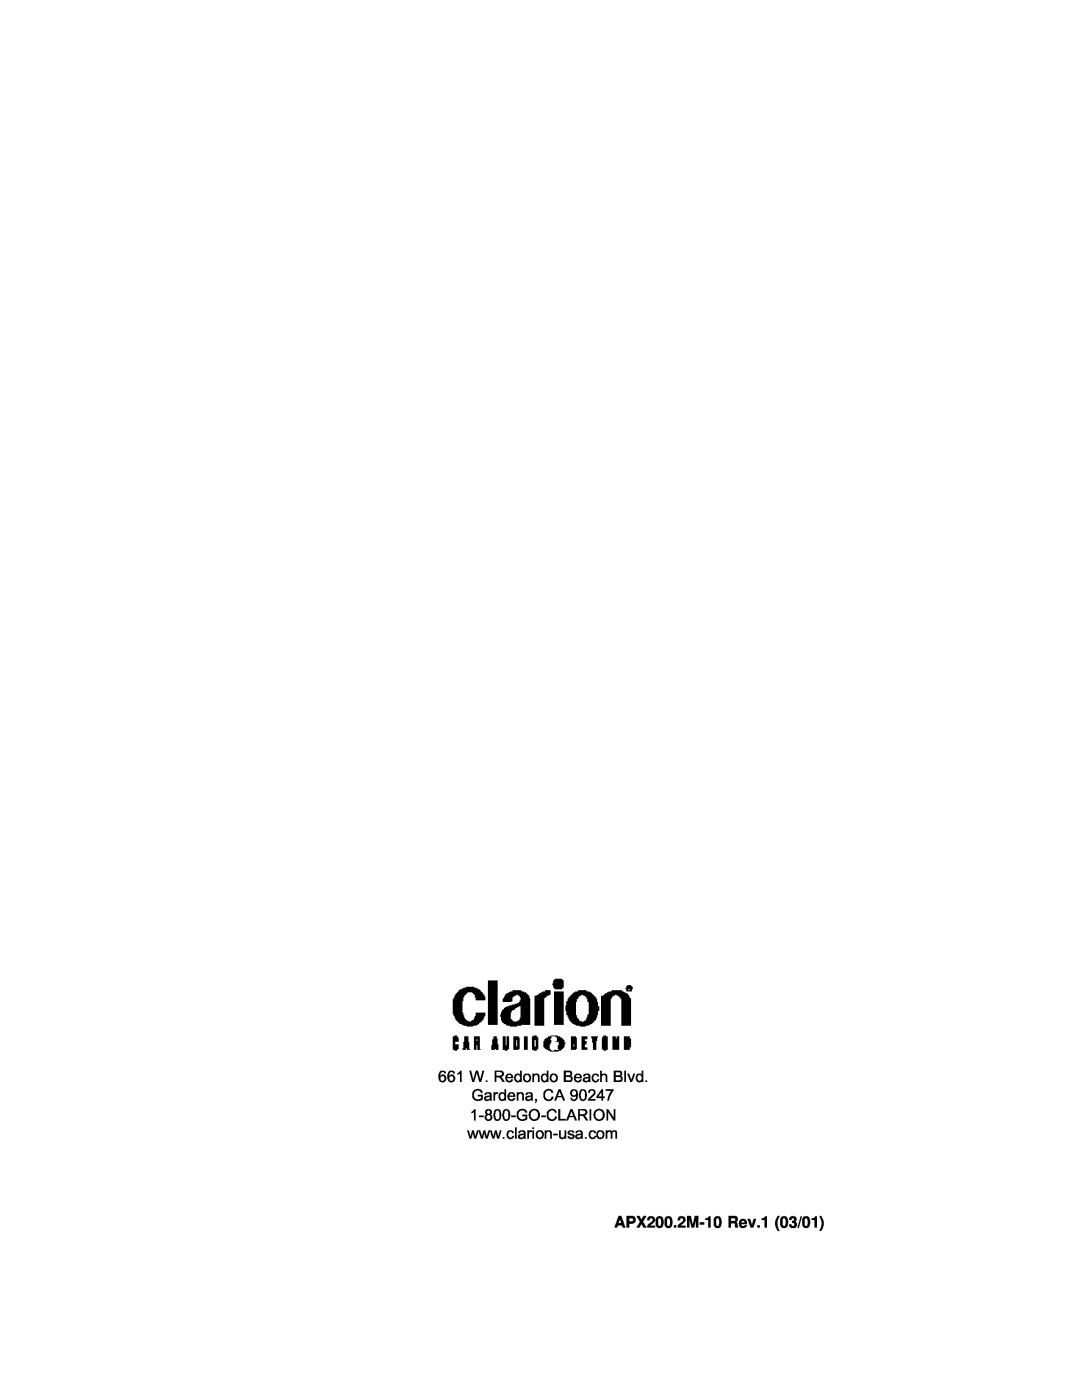 Clarion installation manual APX200.2M-10Rev.1 03/01, 661 W. Redondo Beach Blvd Gardena, CA 